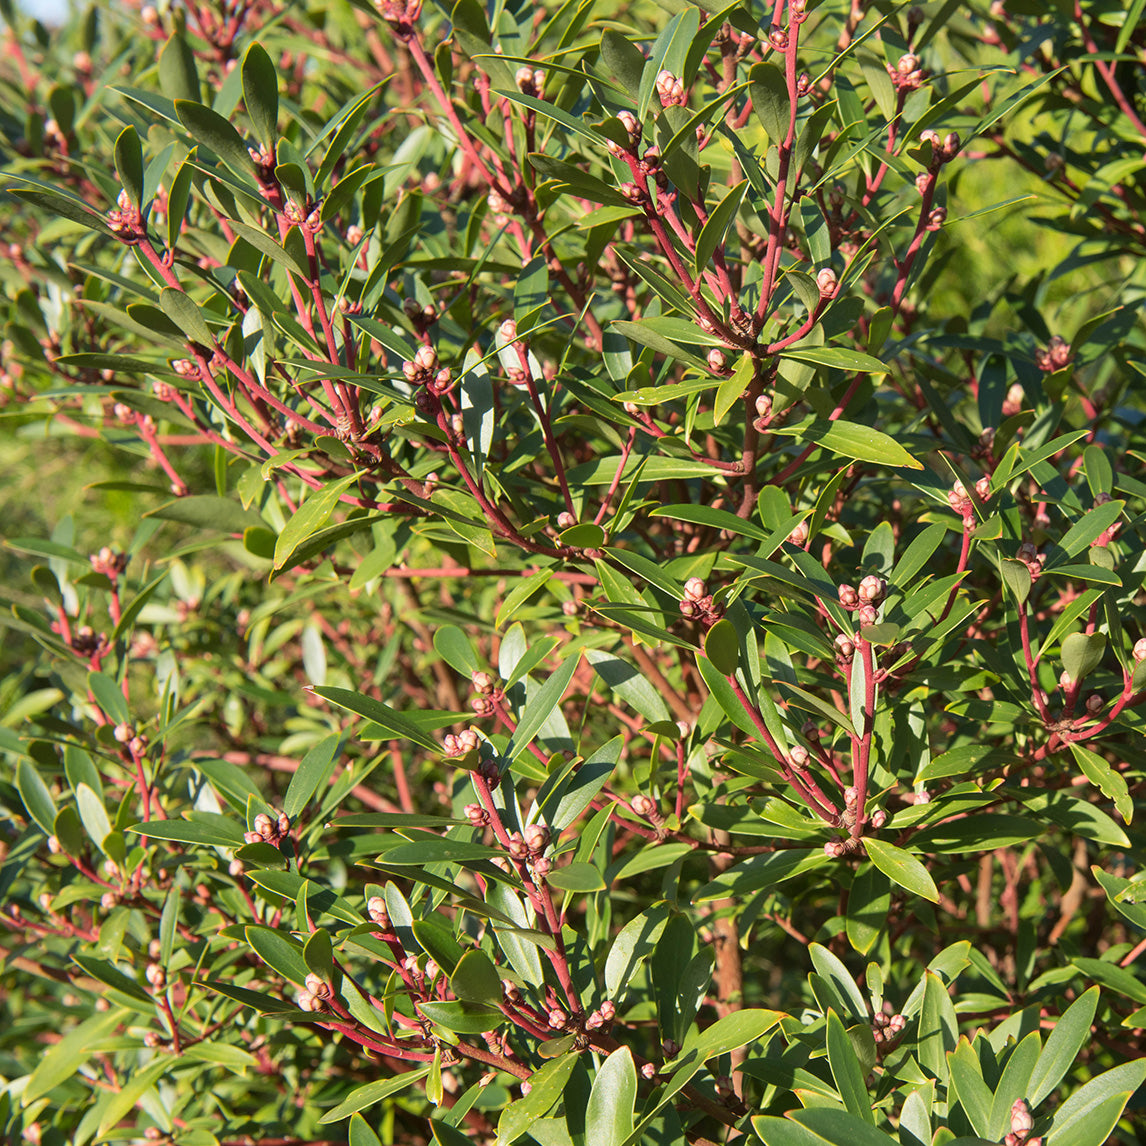 Tasmanian Pepperberry